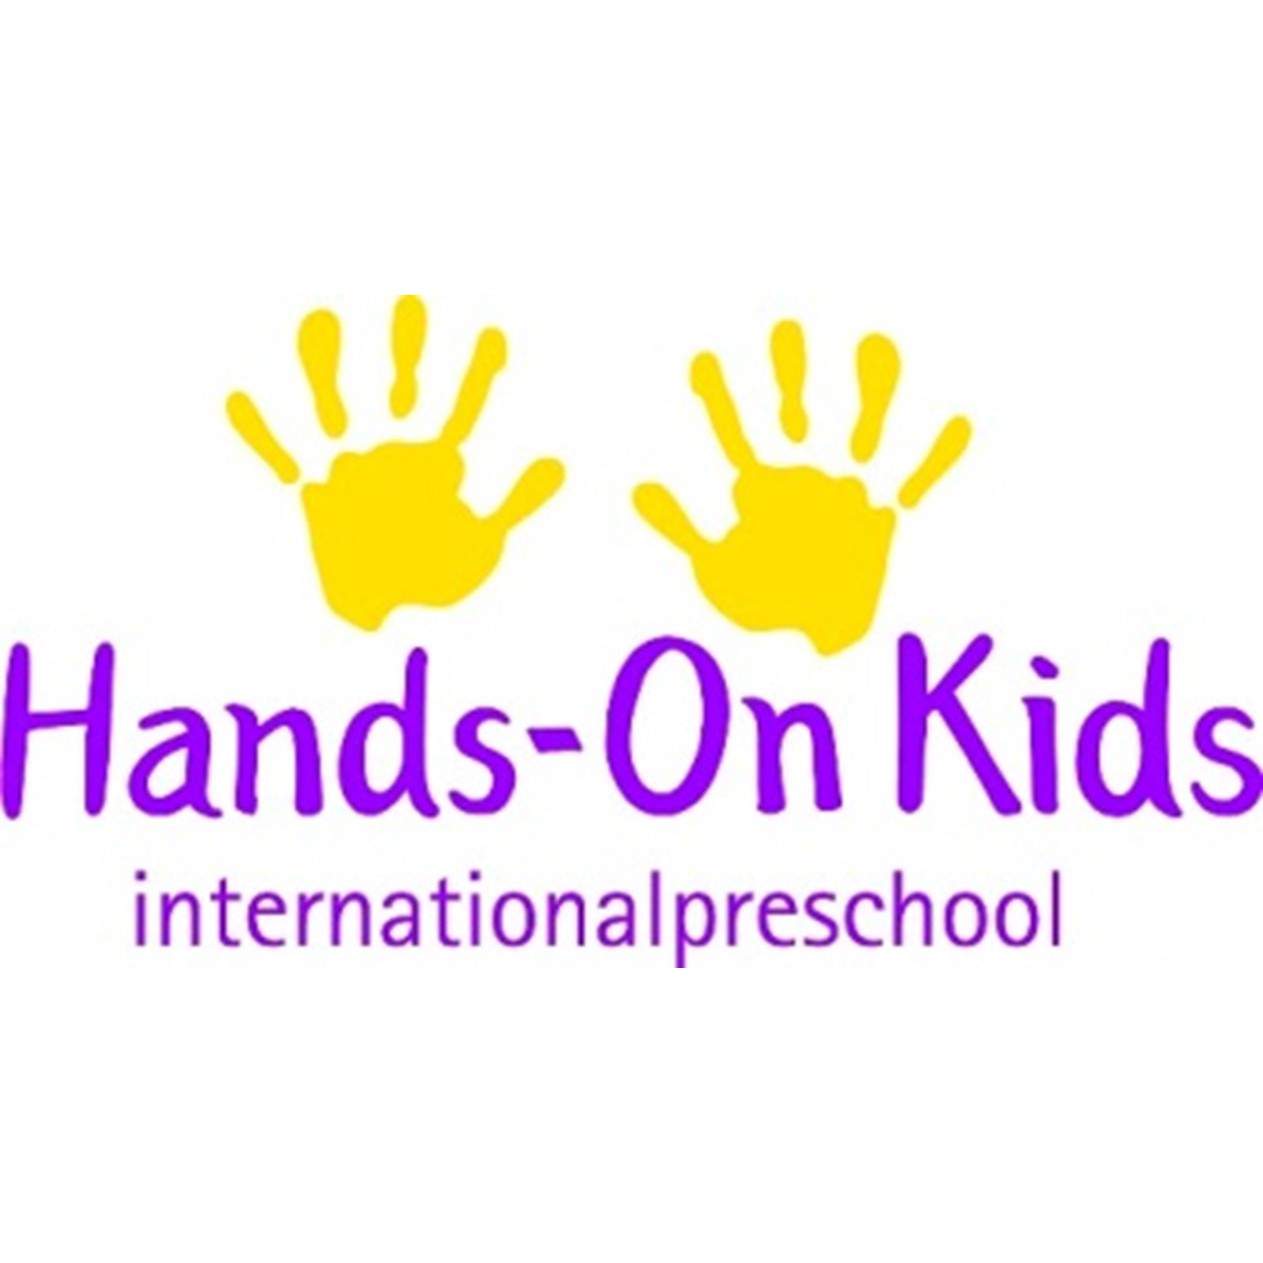 Hands-On Kids International Preschool